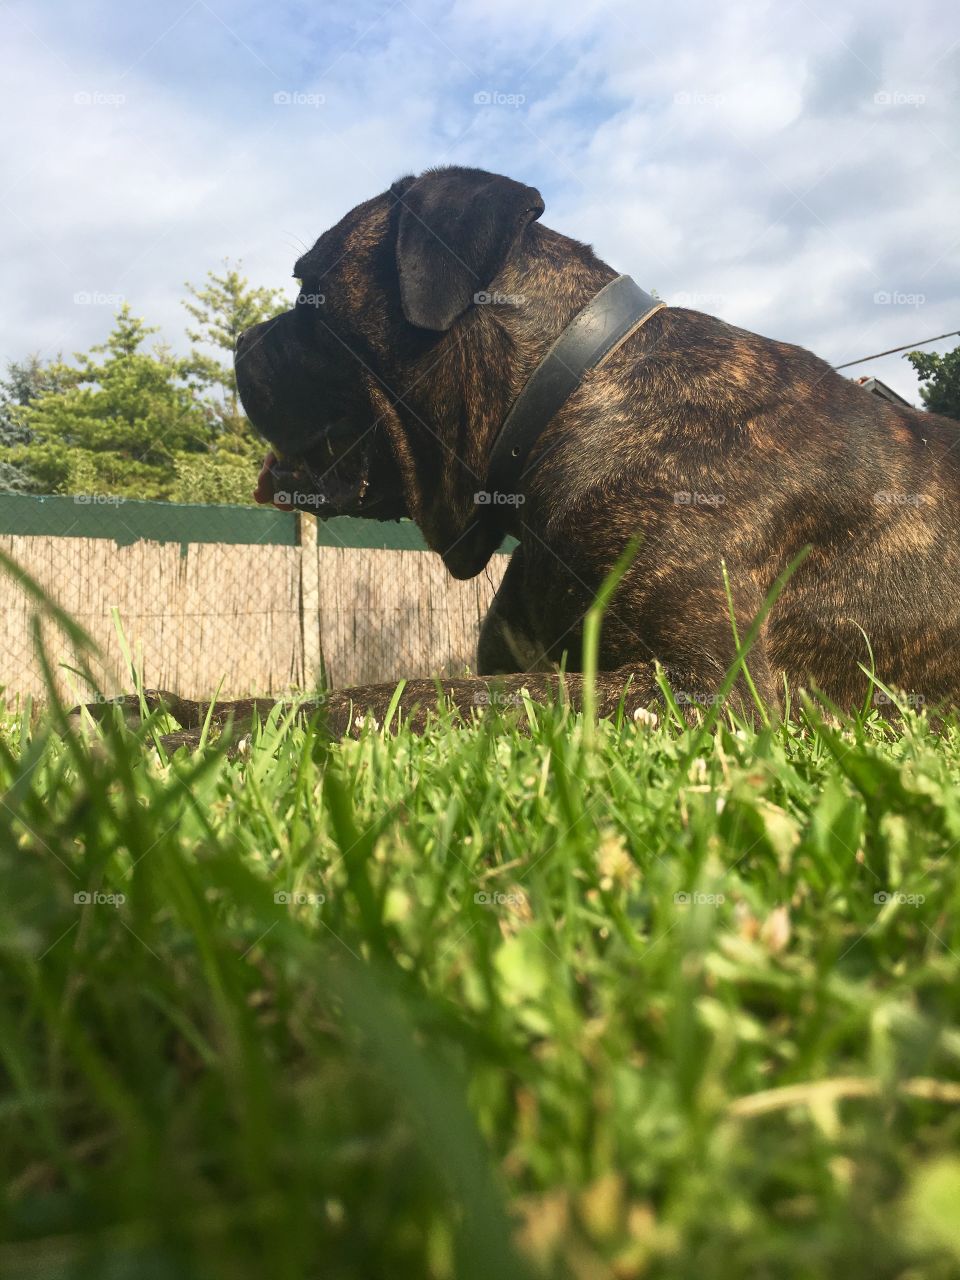 Beautiful big dog chilling in fresh green grass